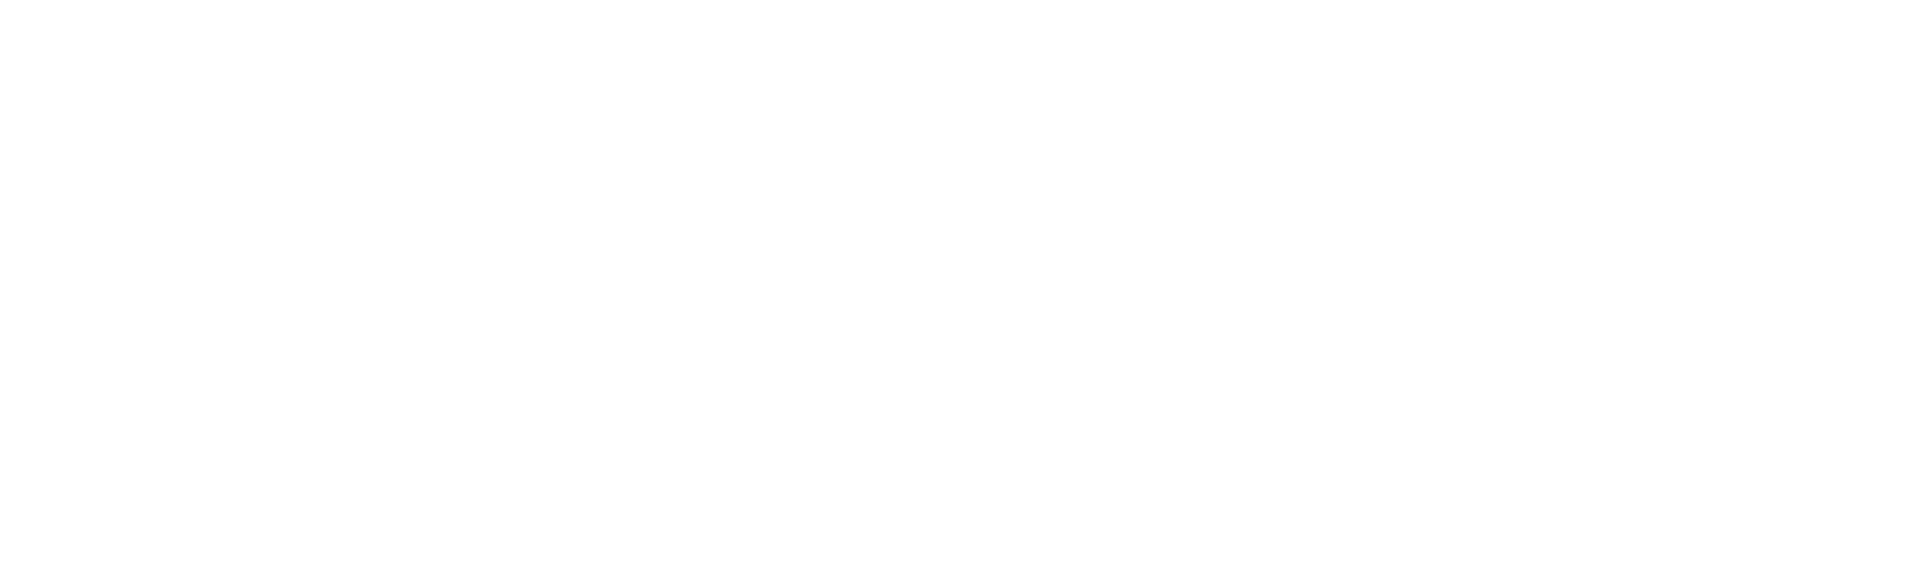 ctp logo